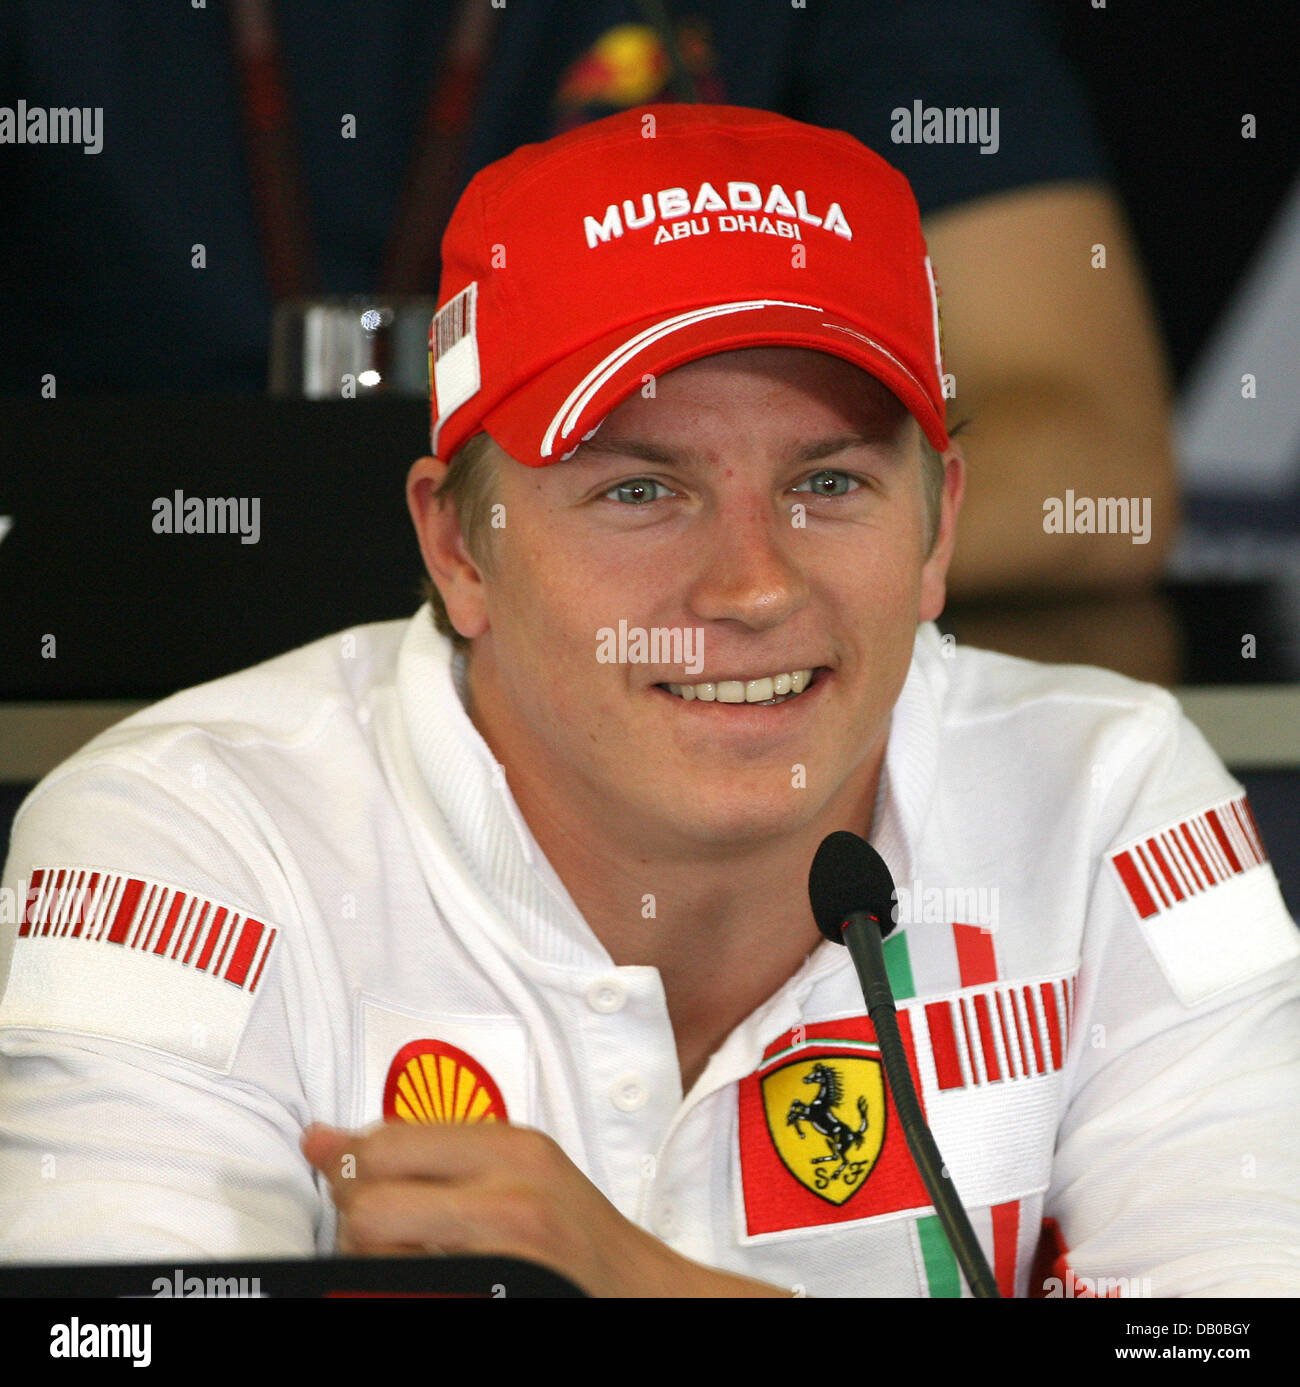 Finnish Formula One Driver Kimi Raikkonen Of Ferrari Laughs During A Press Conference At The